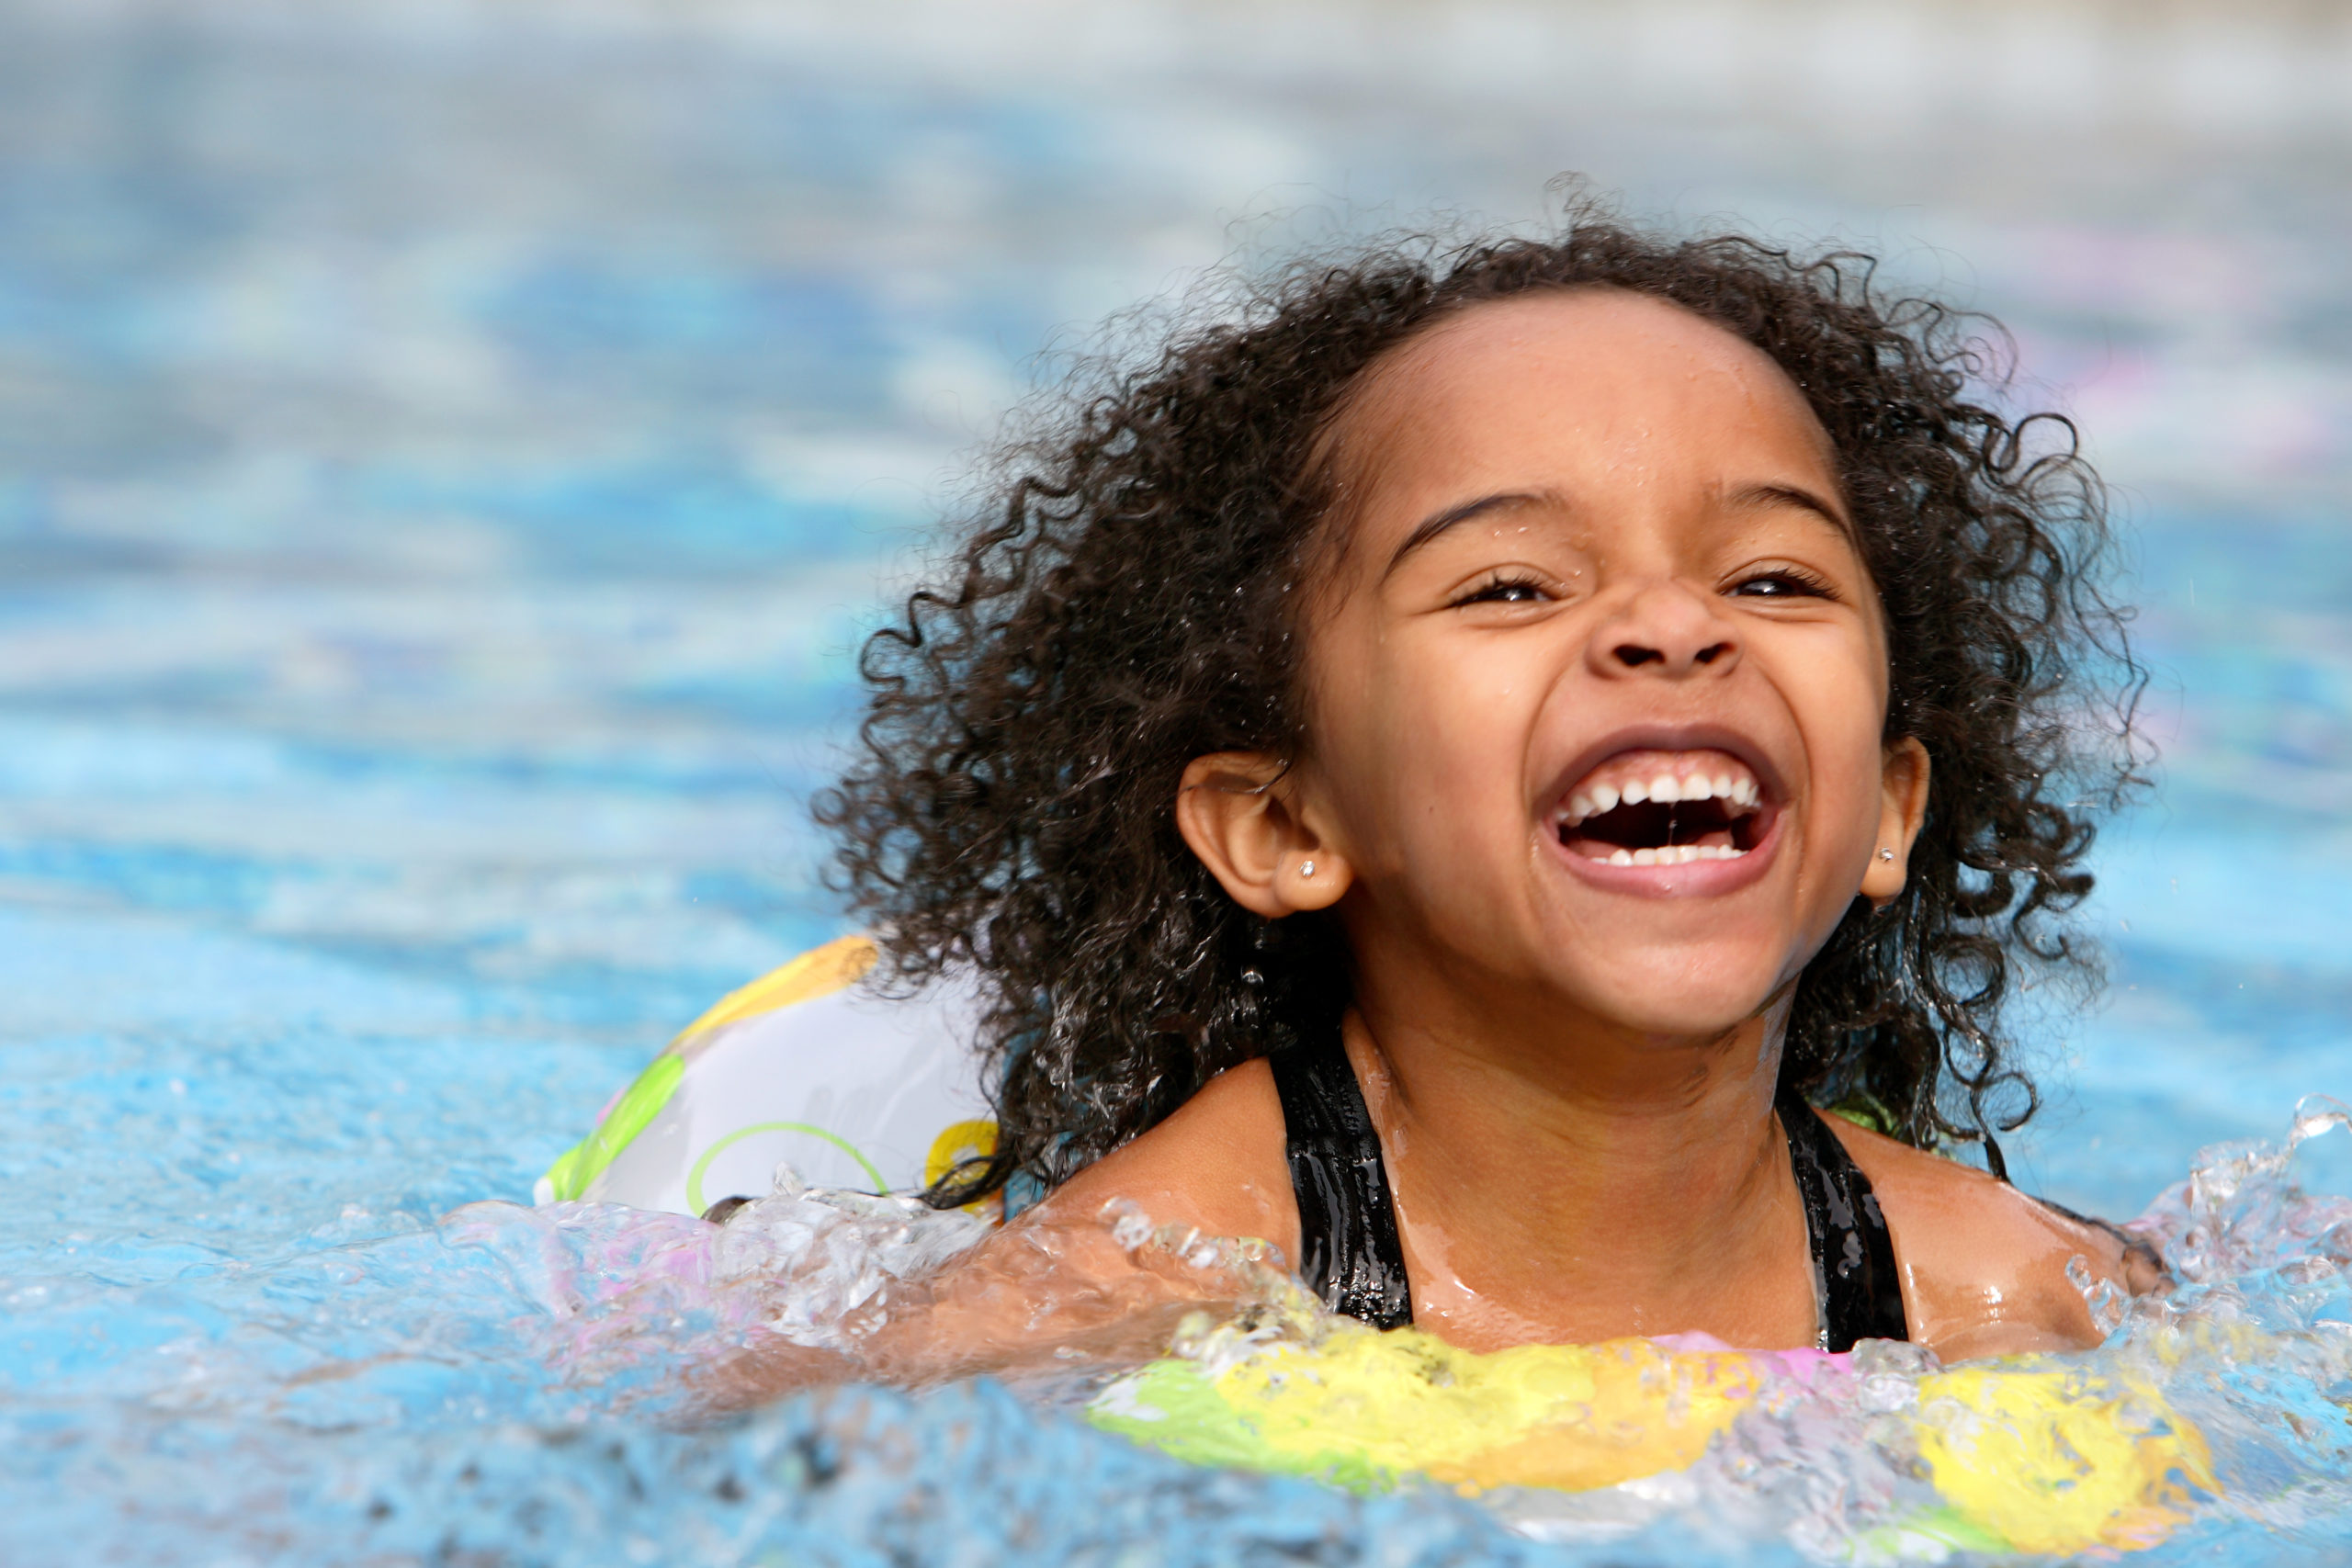 A jubilant kid swimming in a pool